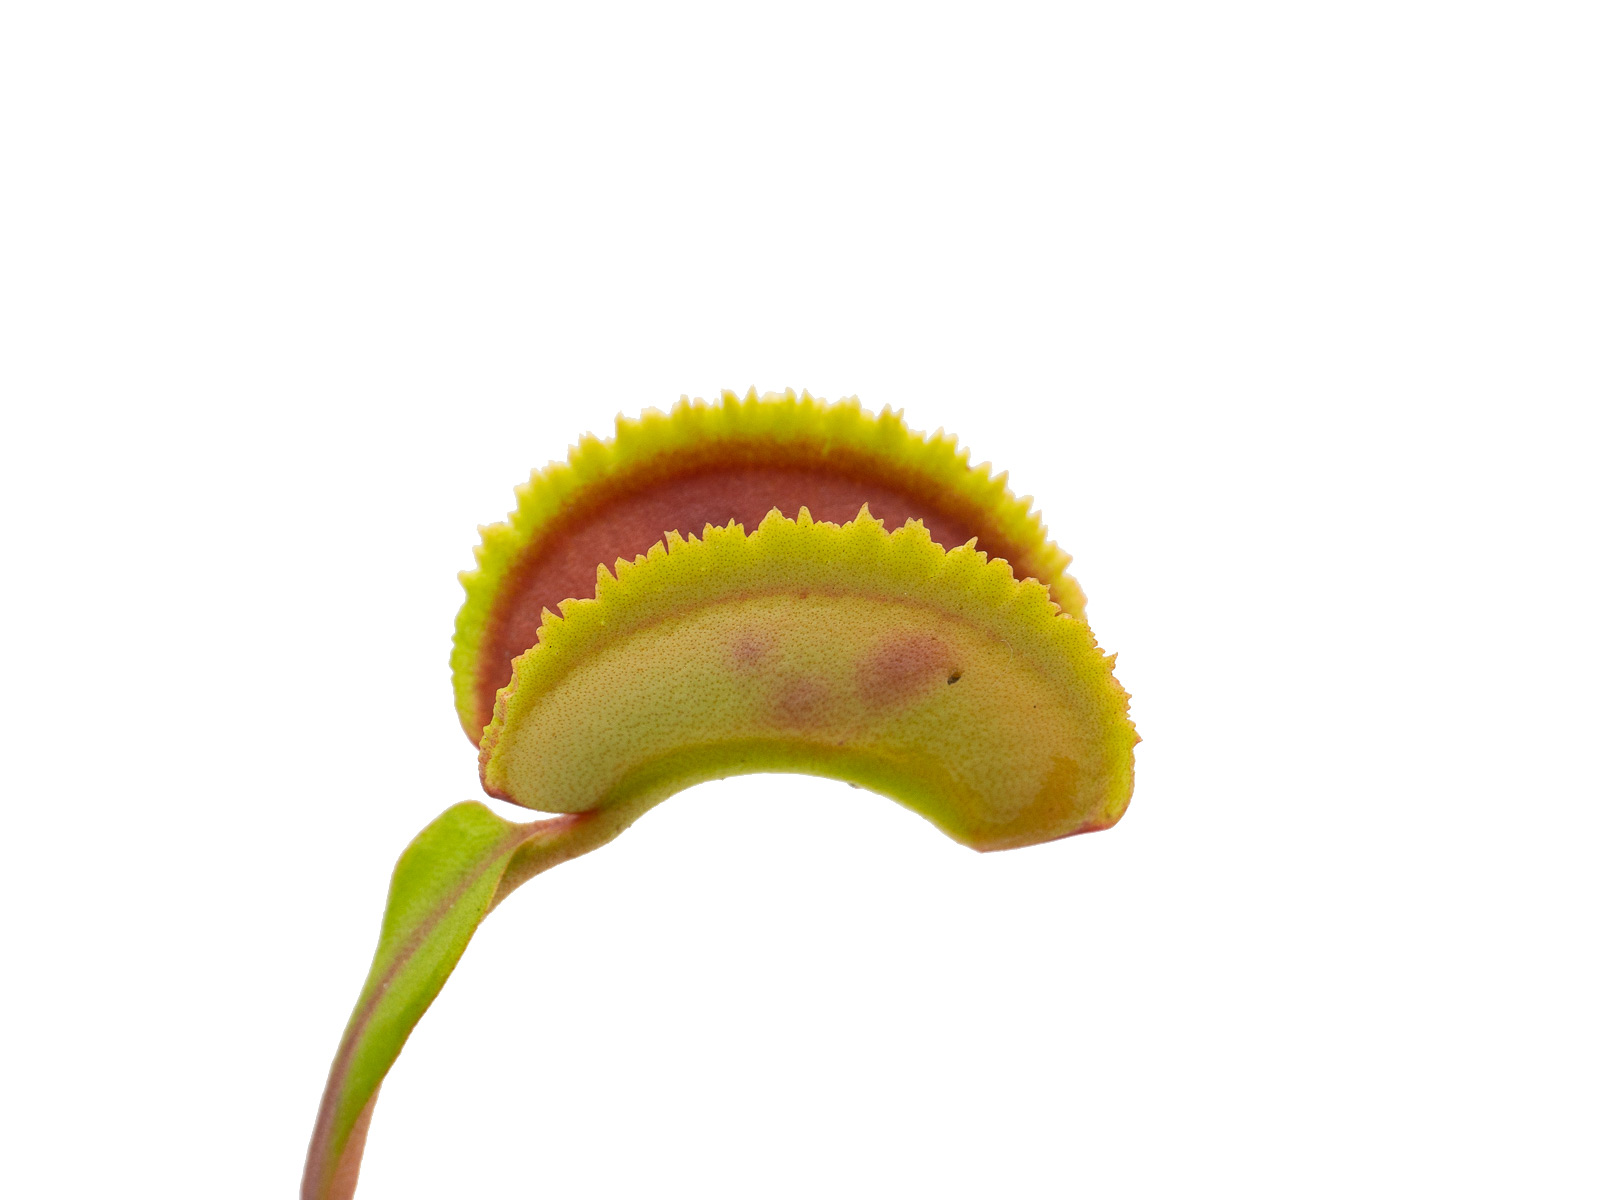 Dionaea muscipula - Bristle Tooth